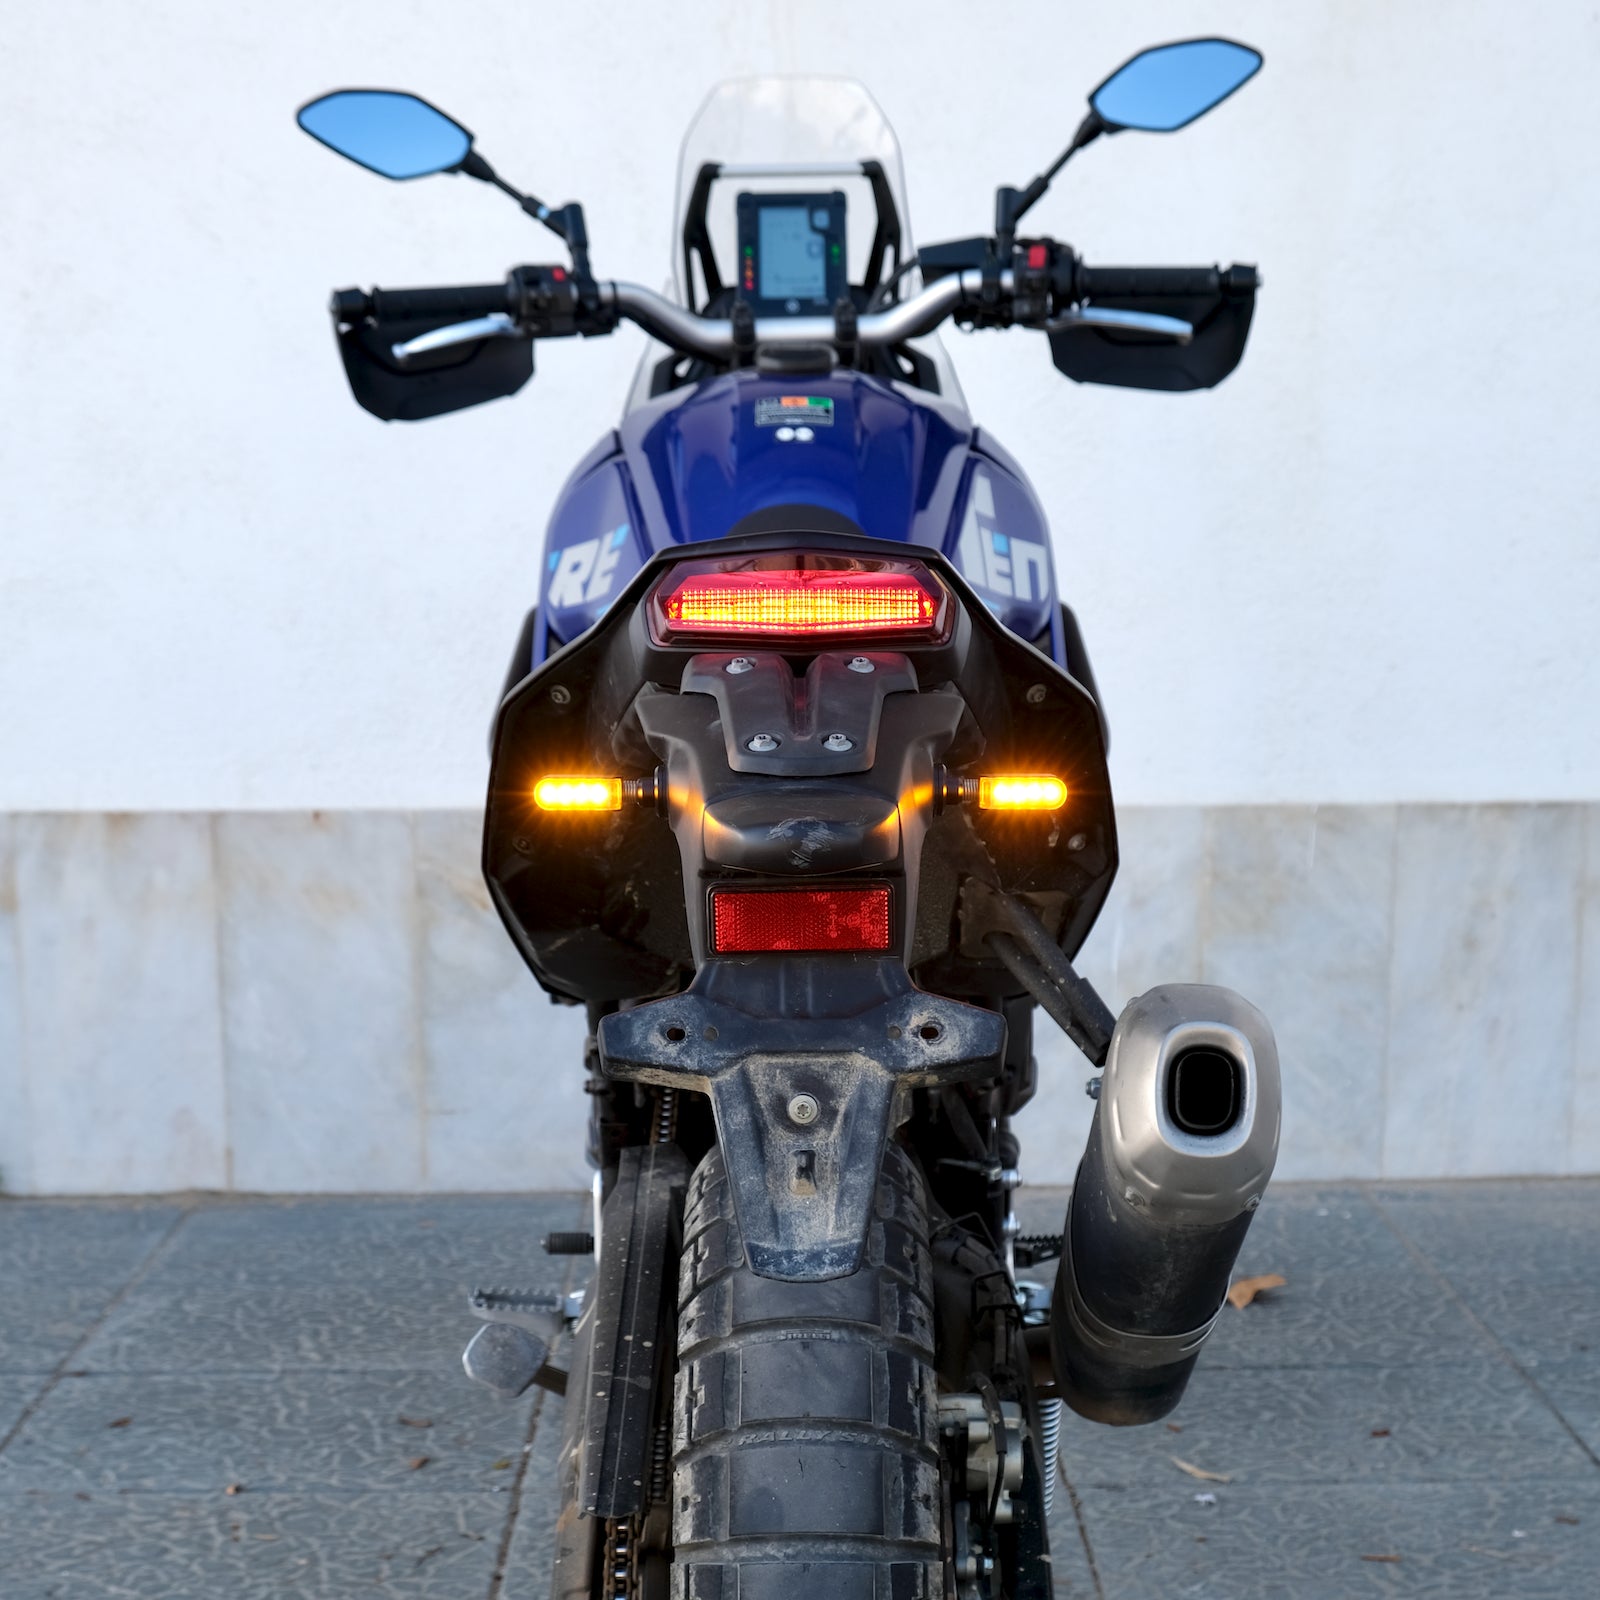 Flex 4 - LED Motorcycle Turn Signals - Full Kit